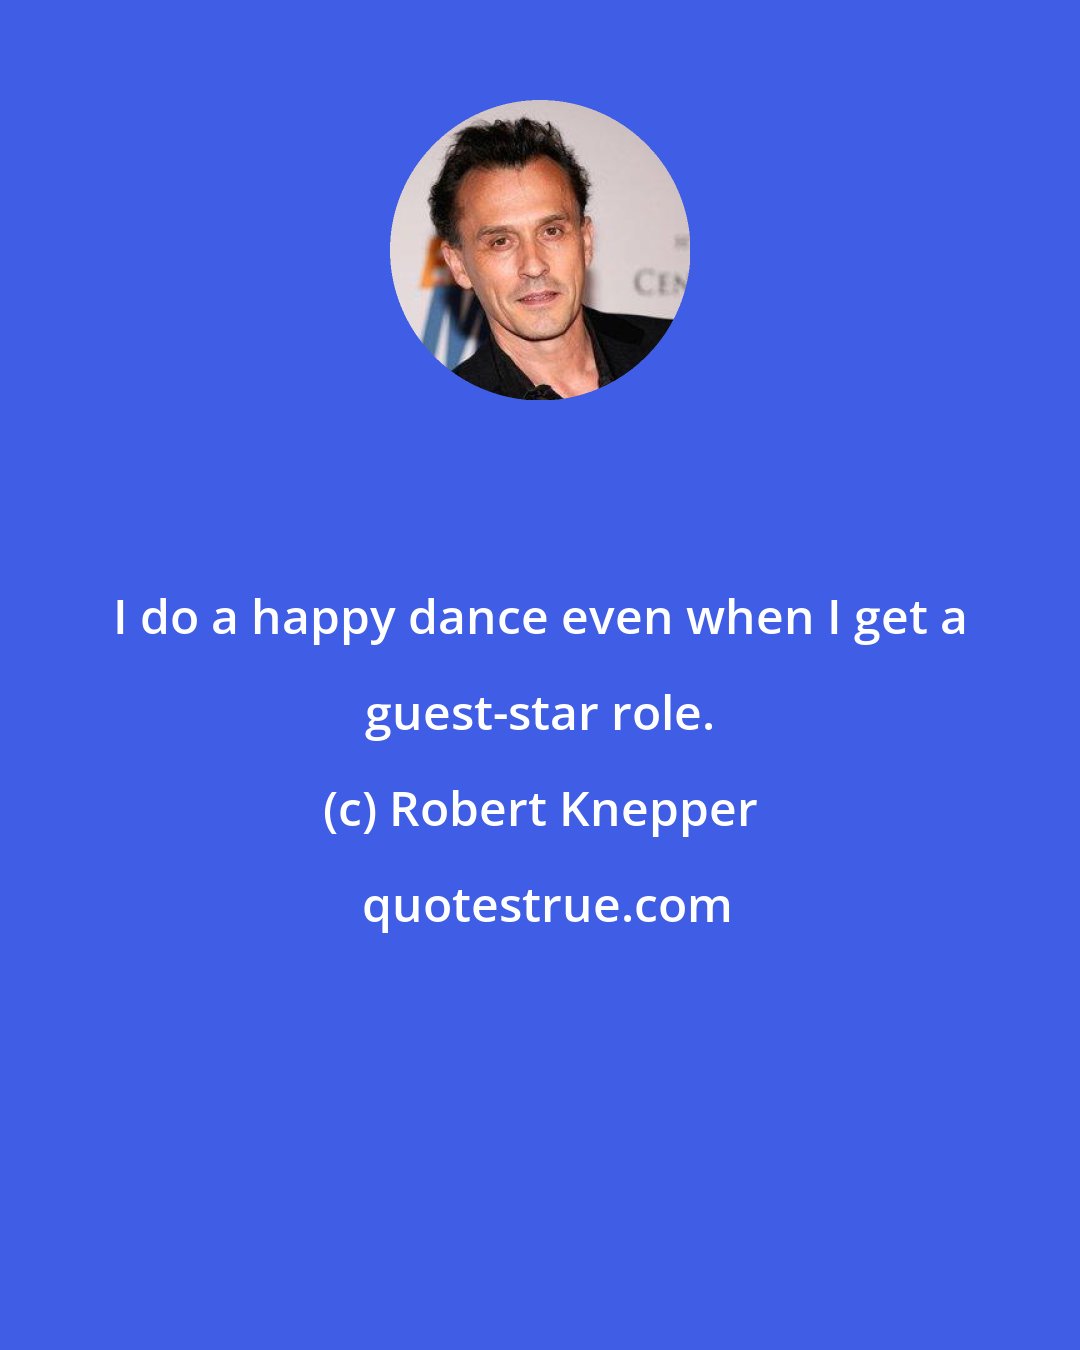 Robert Knepper: I do a happy dance even when I get a guest-star role.